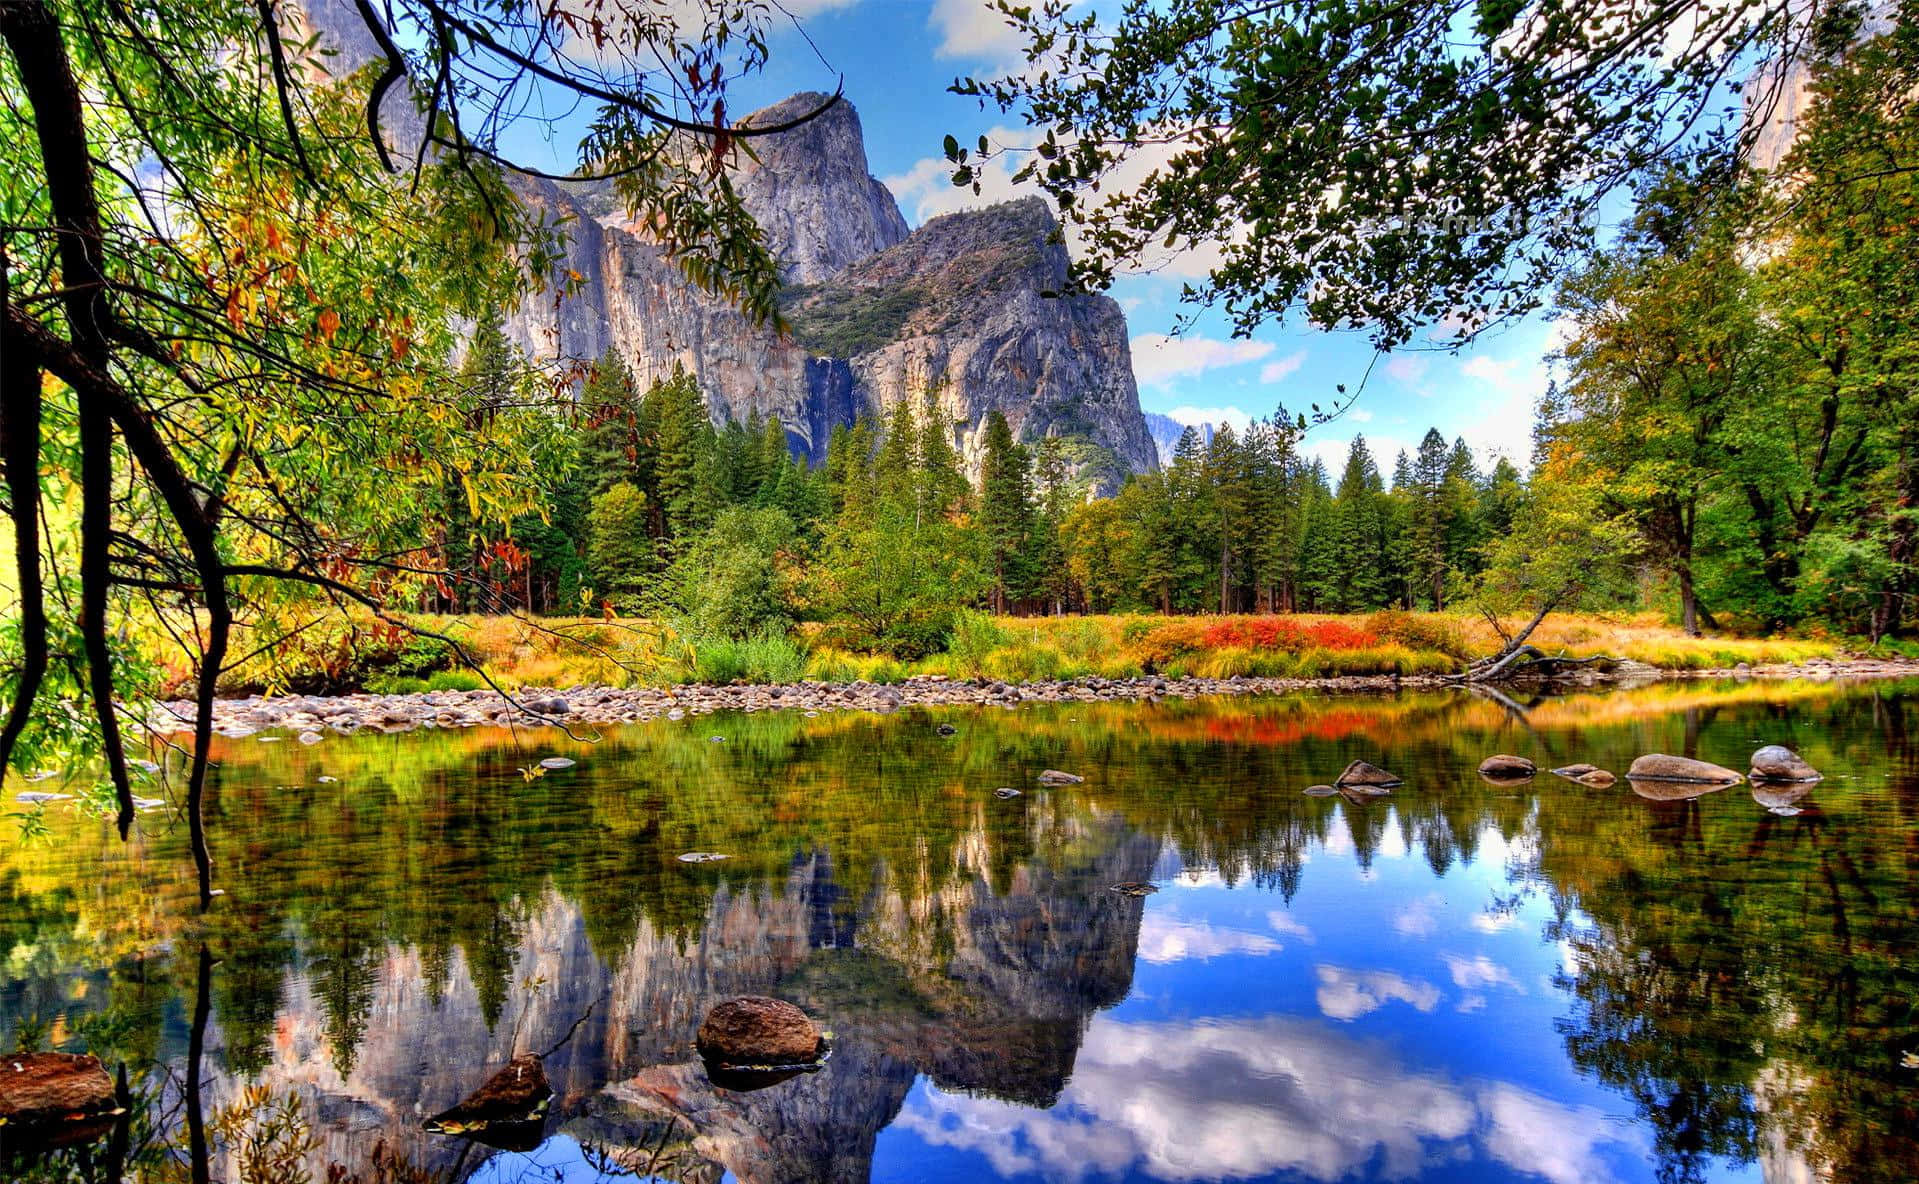 16,367,913 Nature Wallpaper Images, Stock Photos & Vectors | Shutterstock